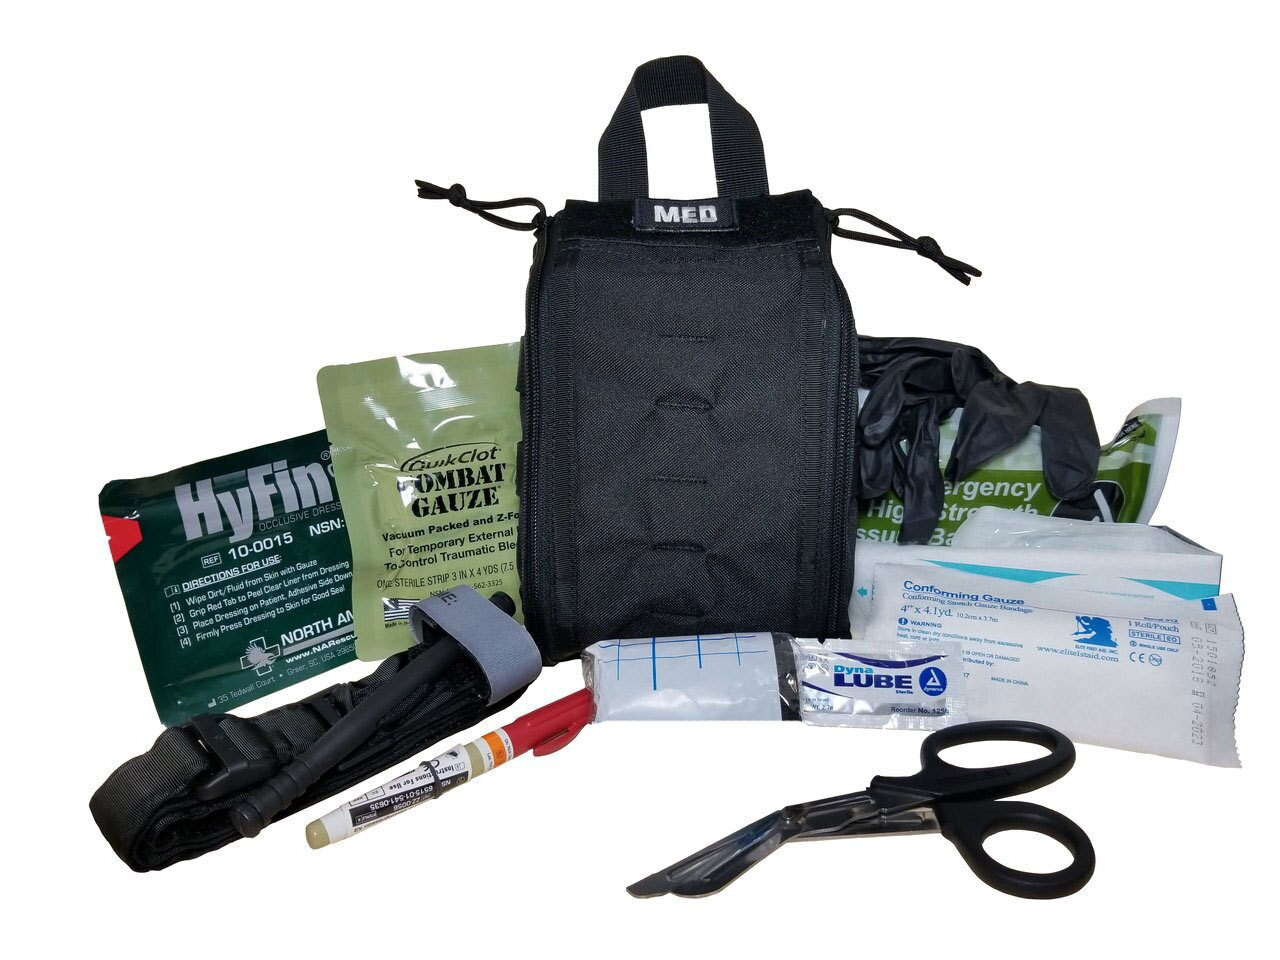 Explorer OD Green U.S. Military Level 3 Tactical Backpack, Large - Explorer  Bags